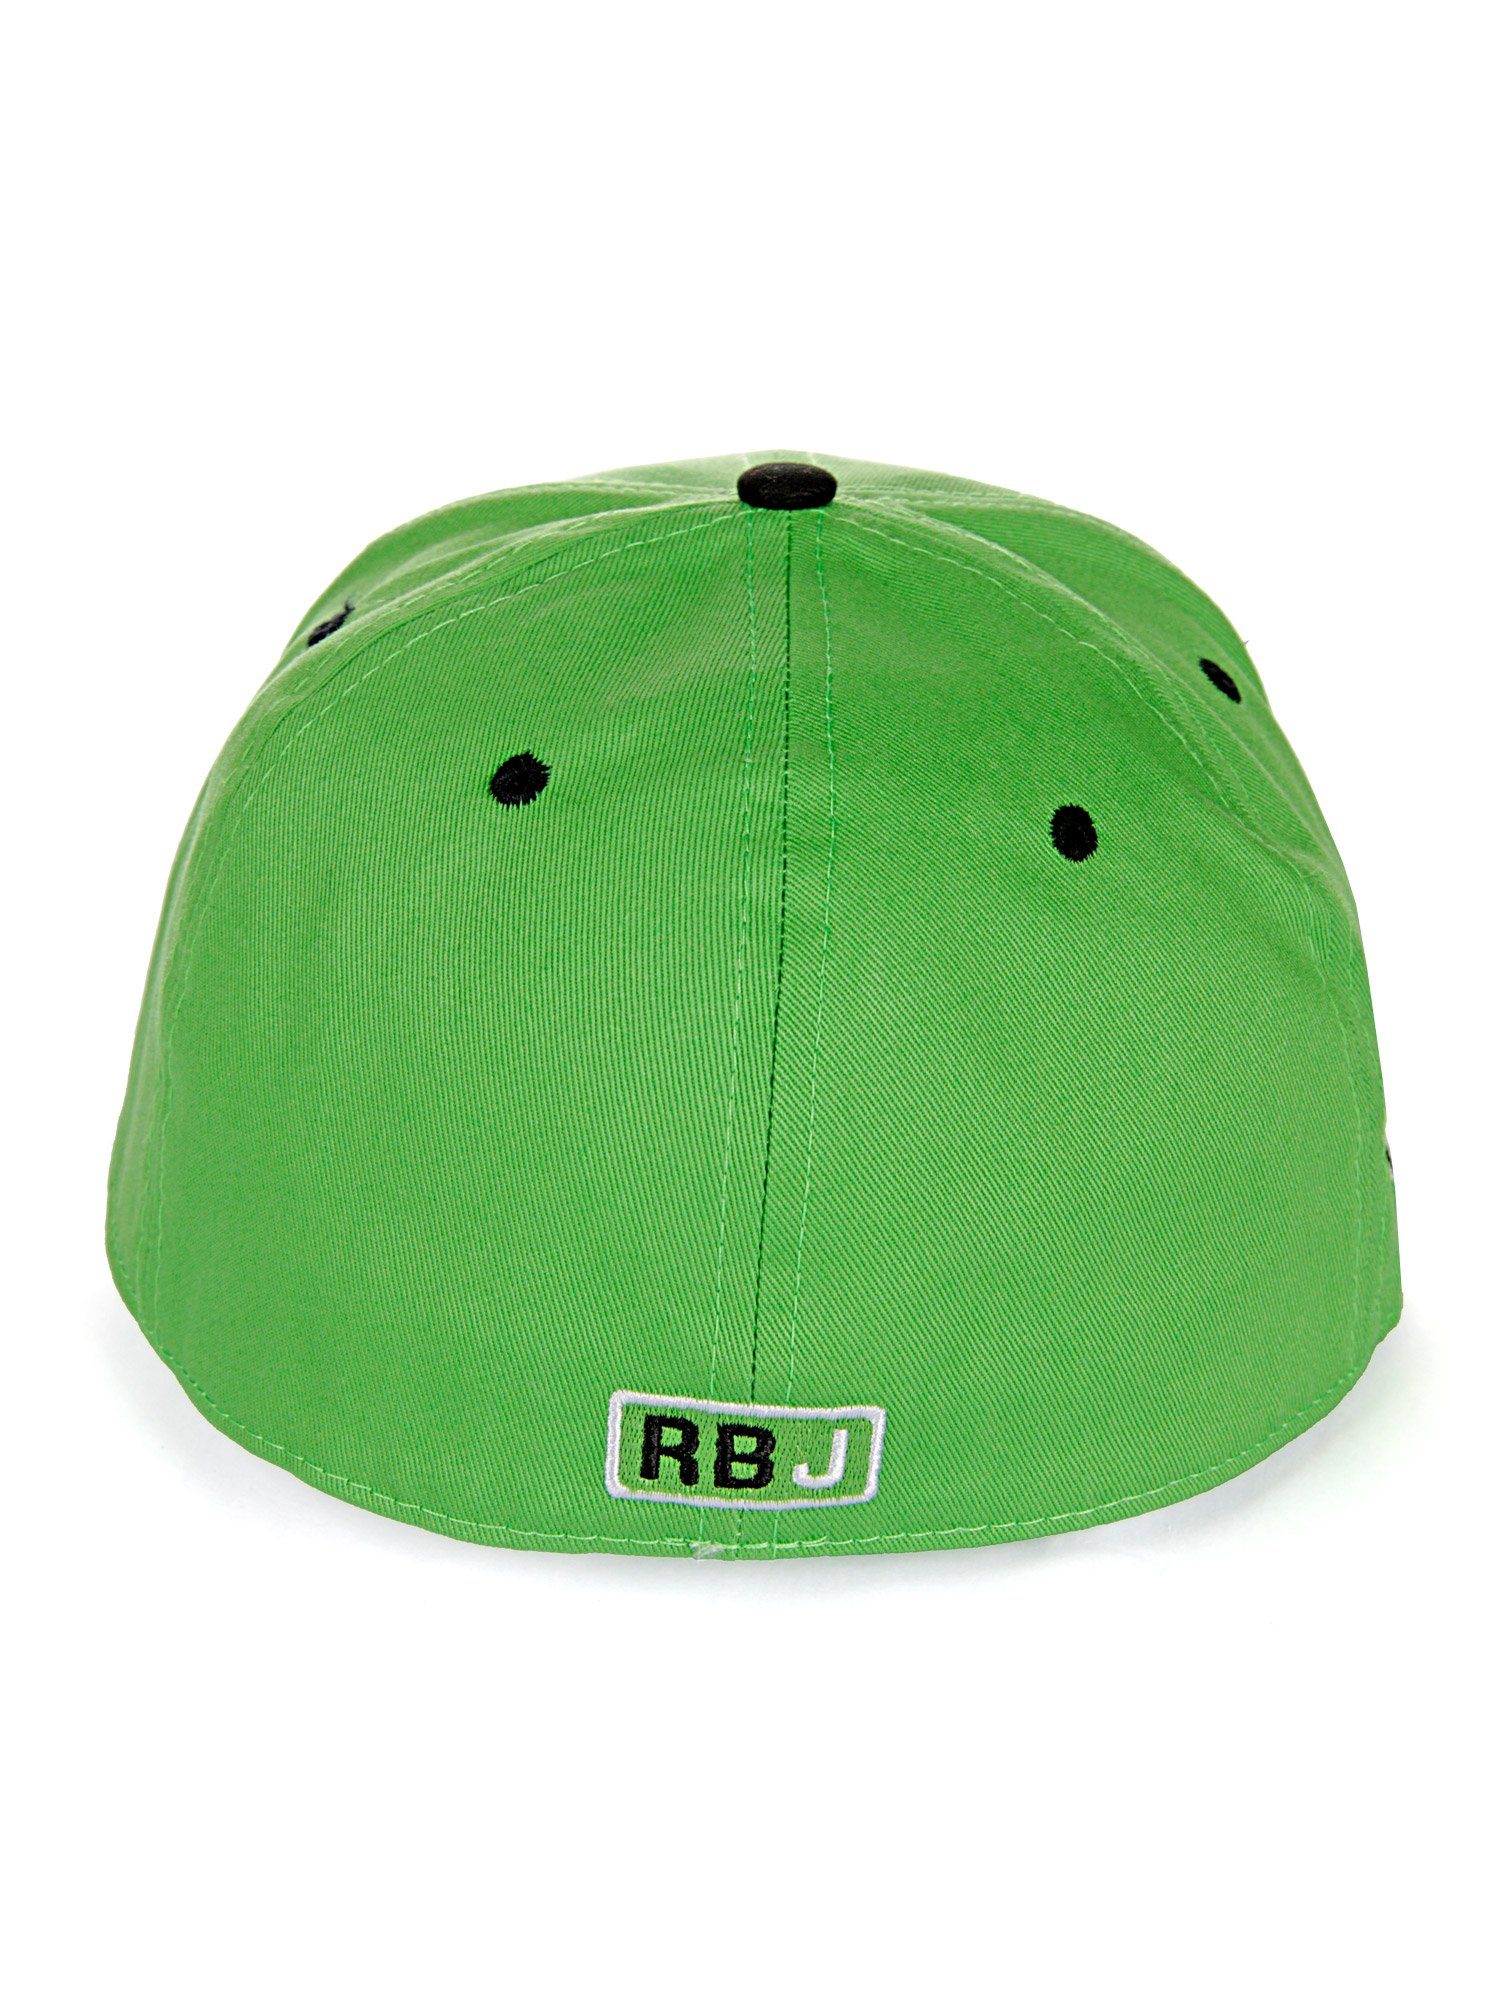 RedBridge Baseball Cap Schirm mit Durham kontrastfarbigem grün-schwarz